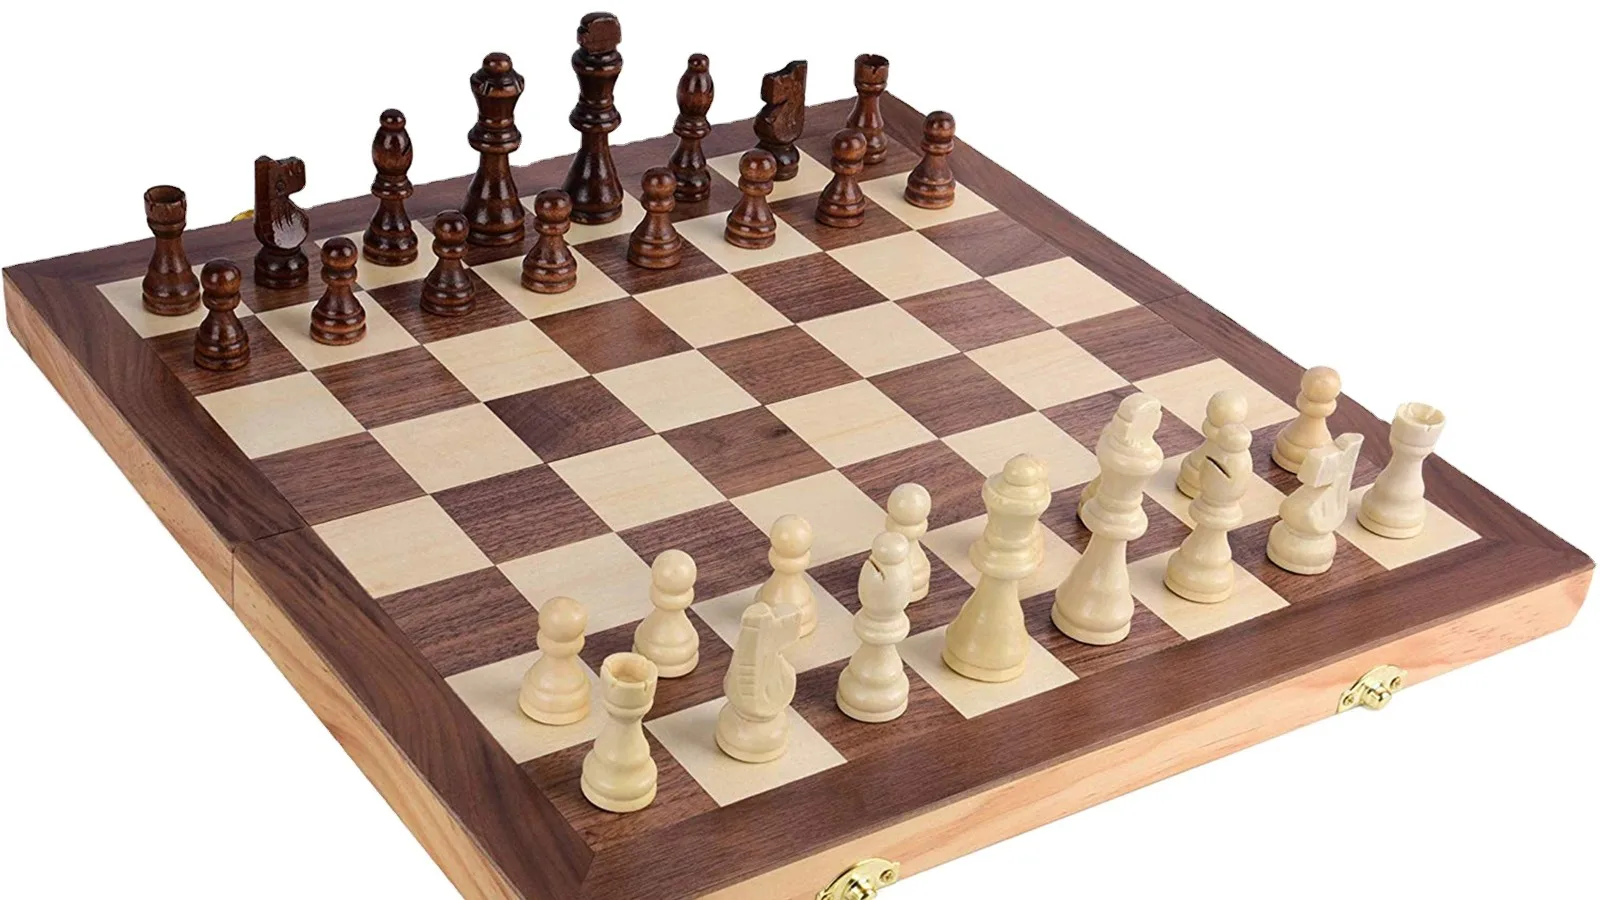 Chesssans图片